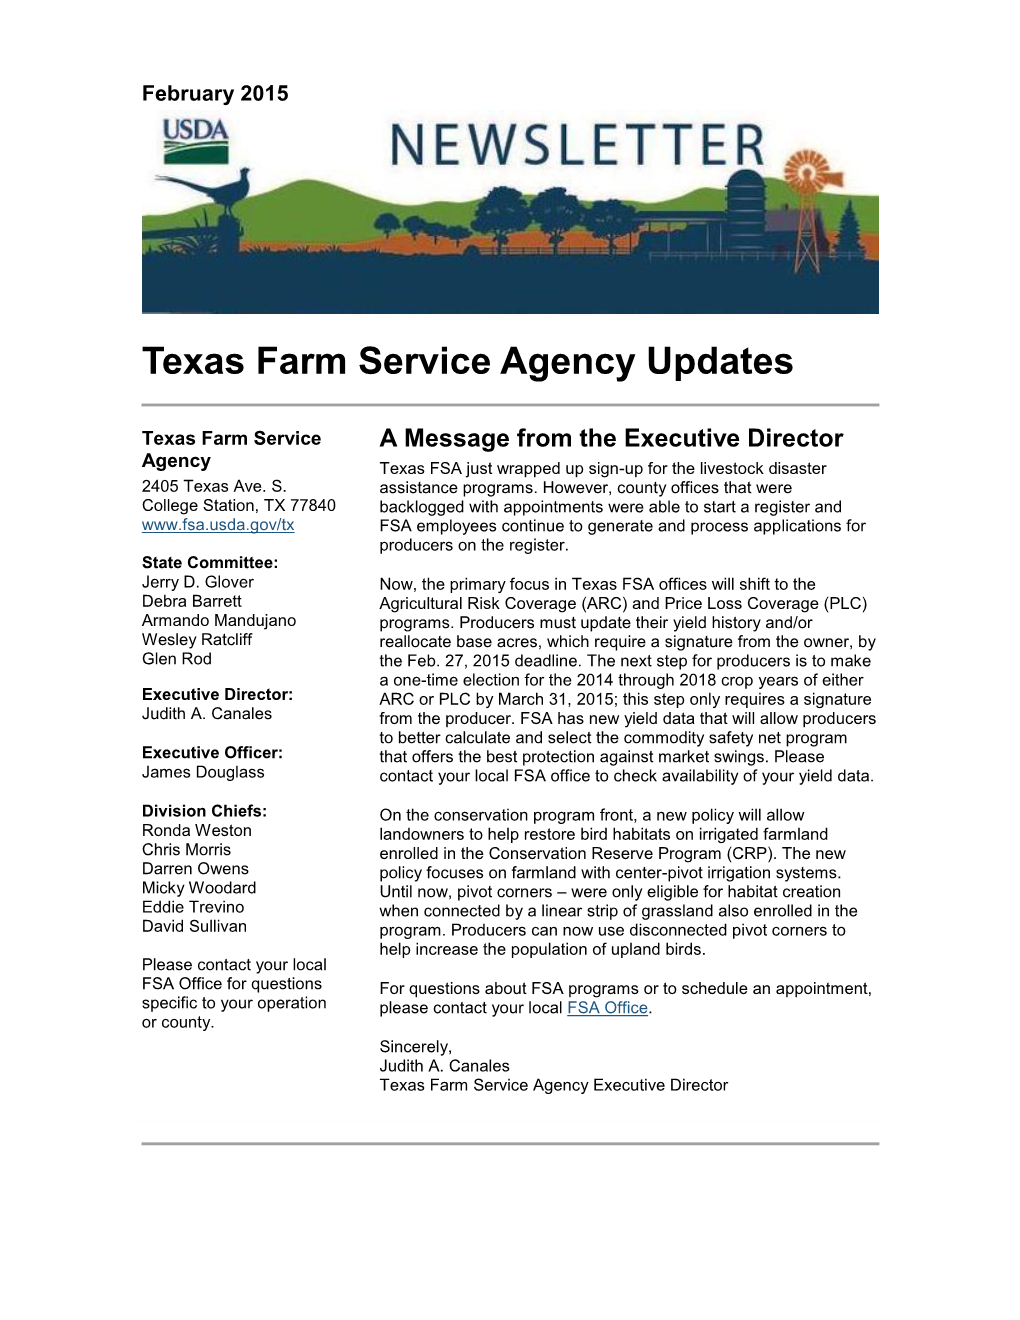 Texas Farm Service Agency Updates